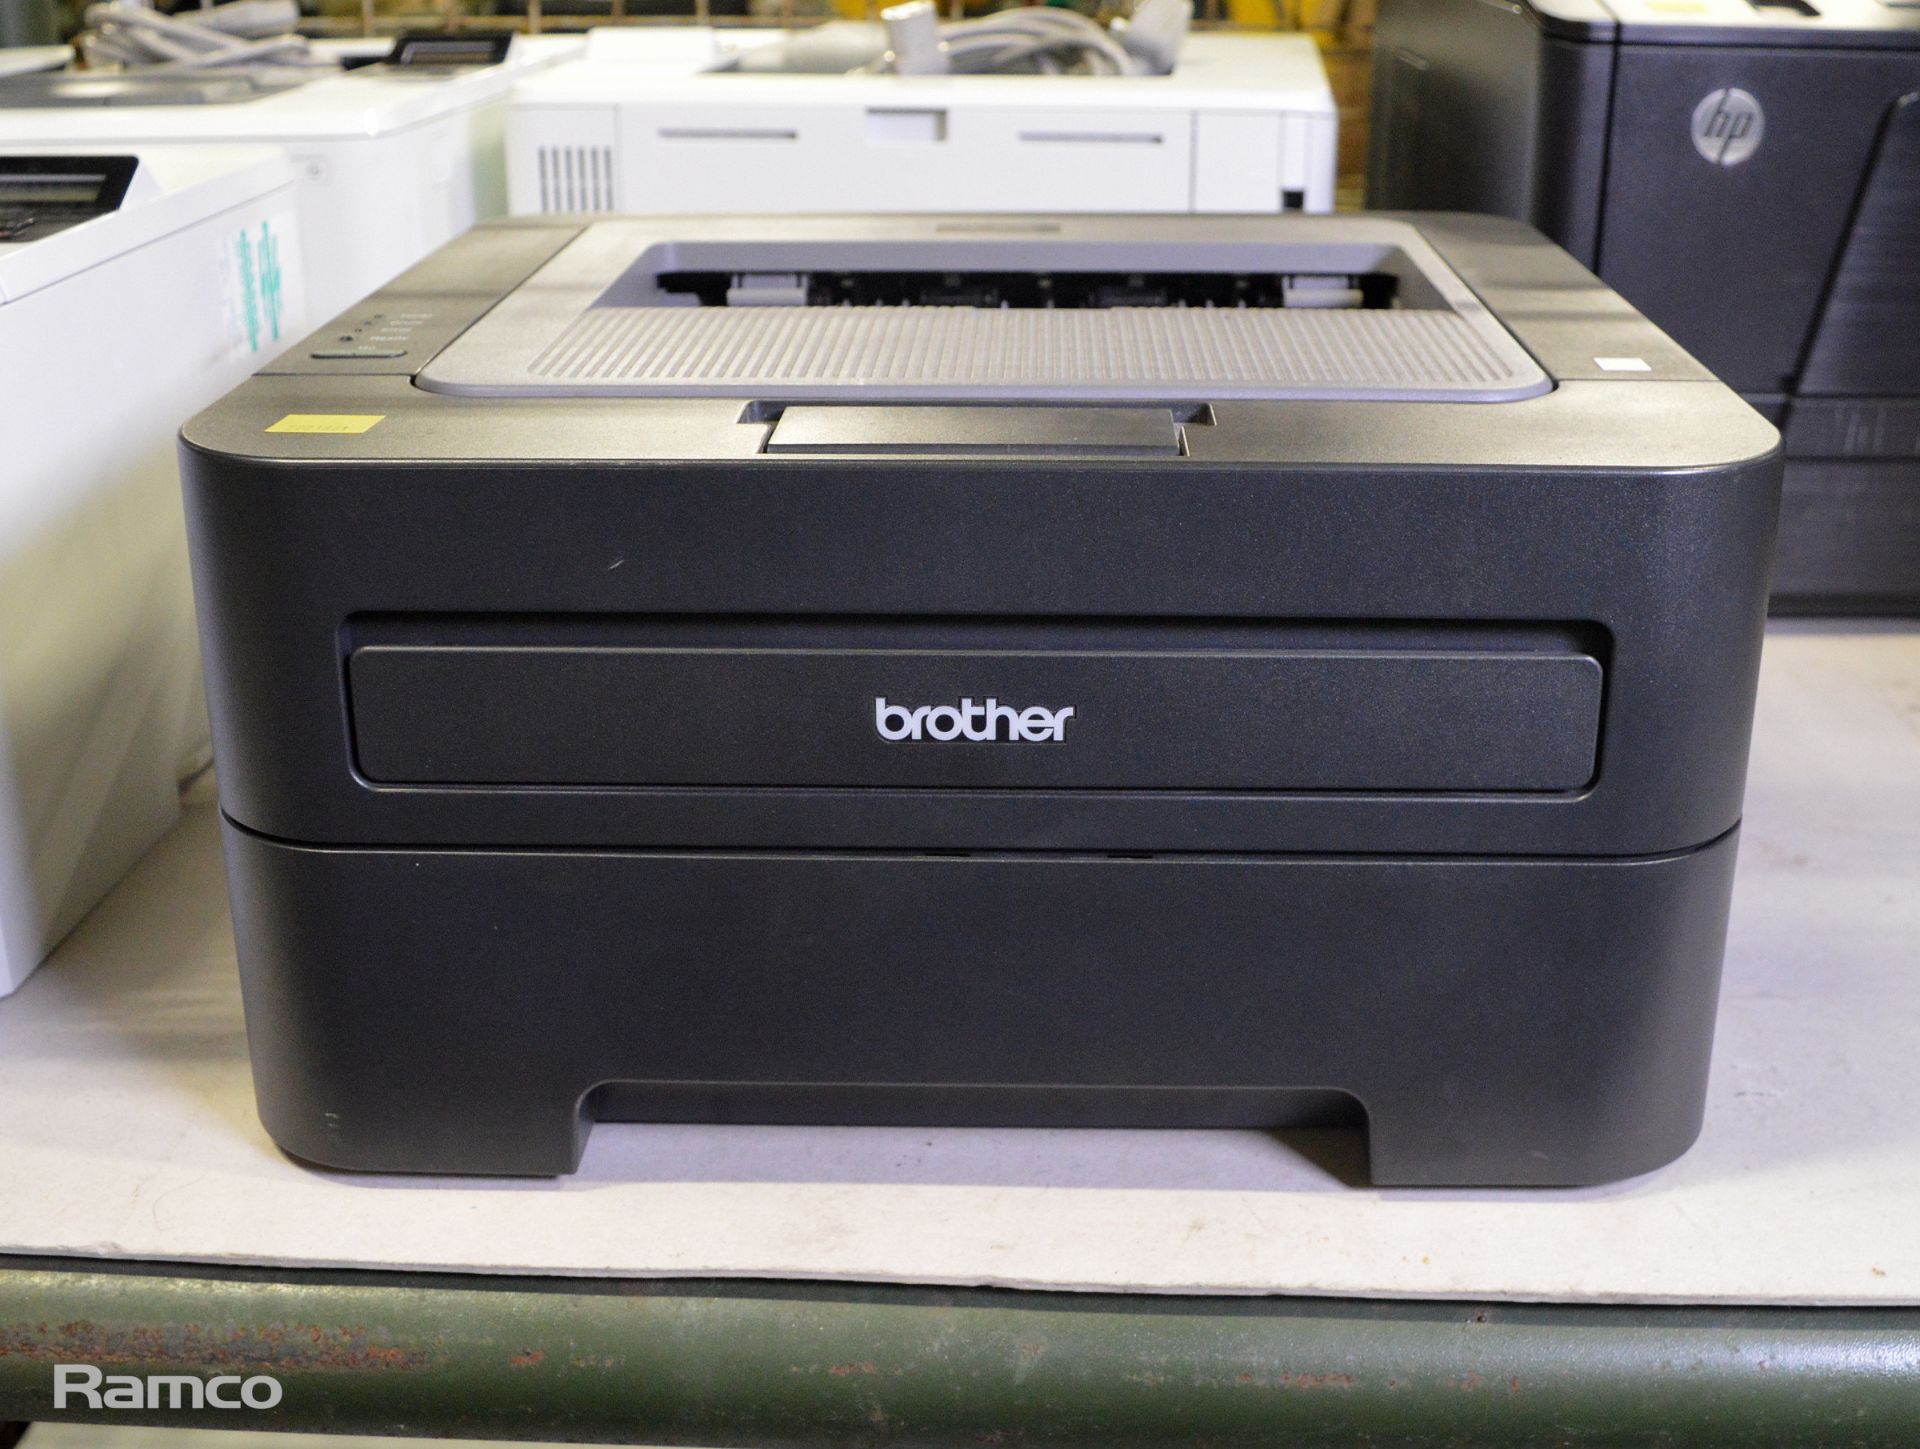 Brother HL-2240 printer, Brother LaserJet Pro printer M401dne, 3x HP laserjet pro M402dn p - Image 5 of 9